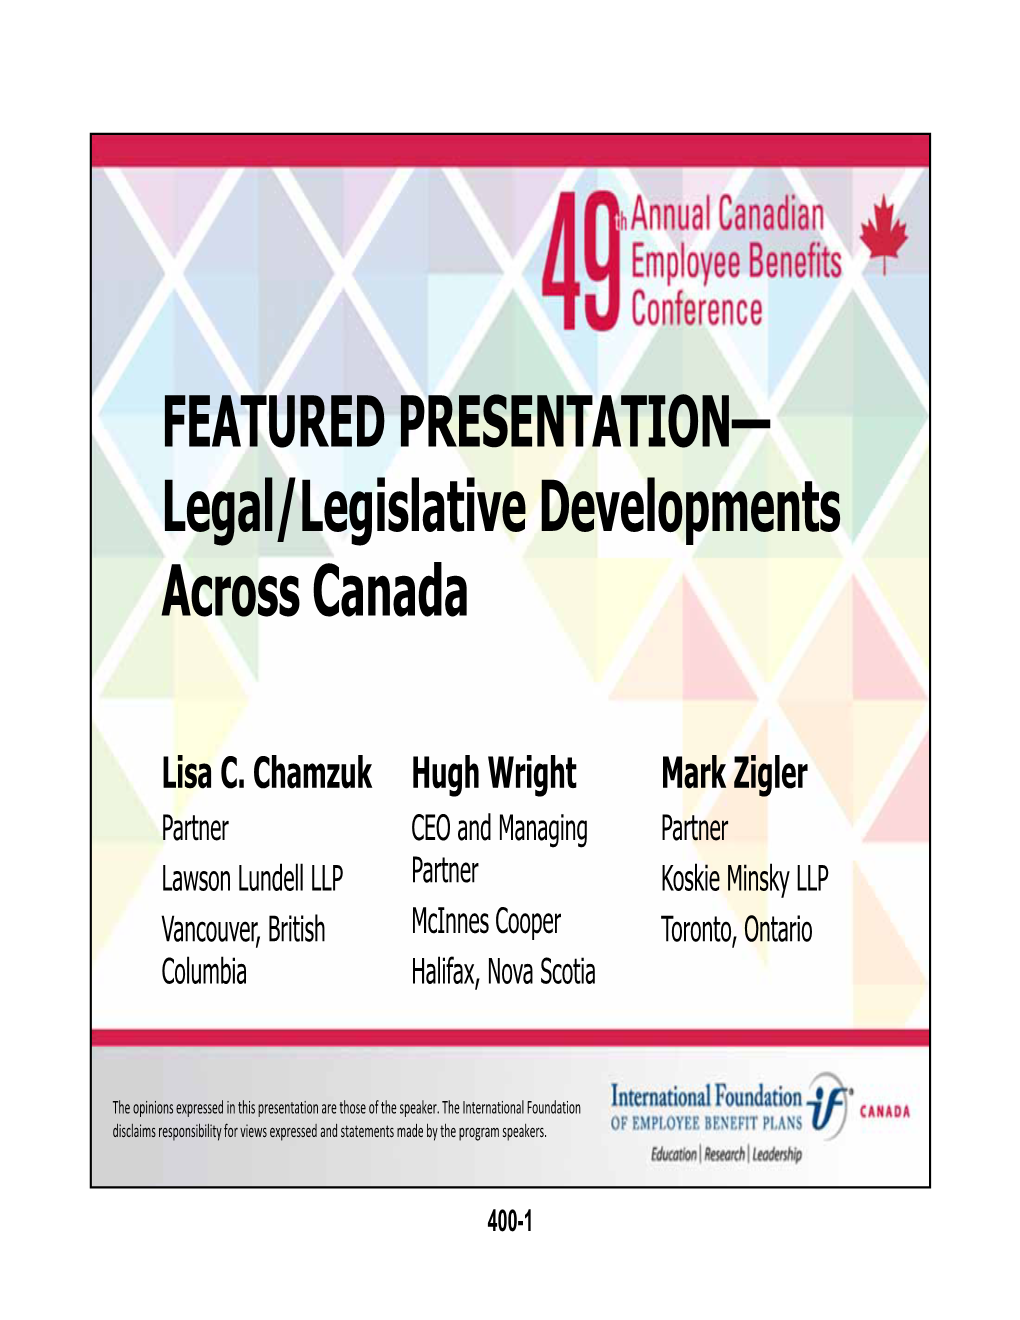 Legal/Legislative Developments Across Canada